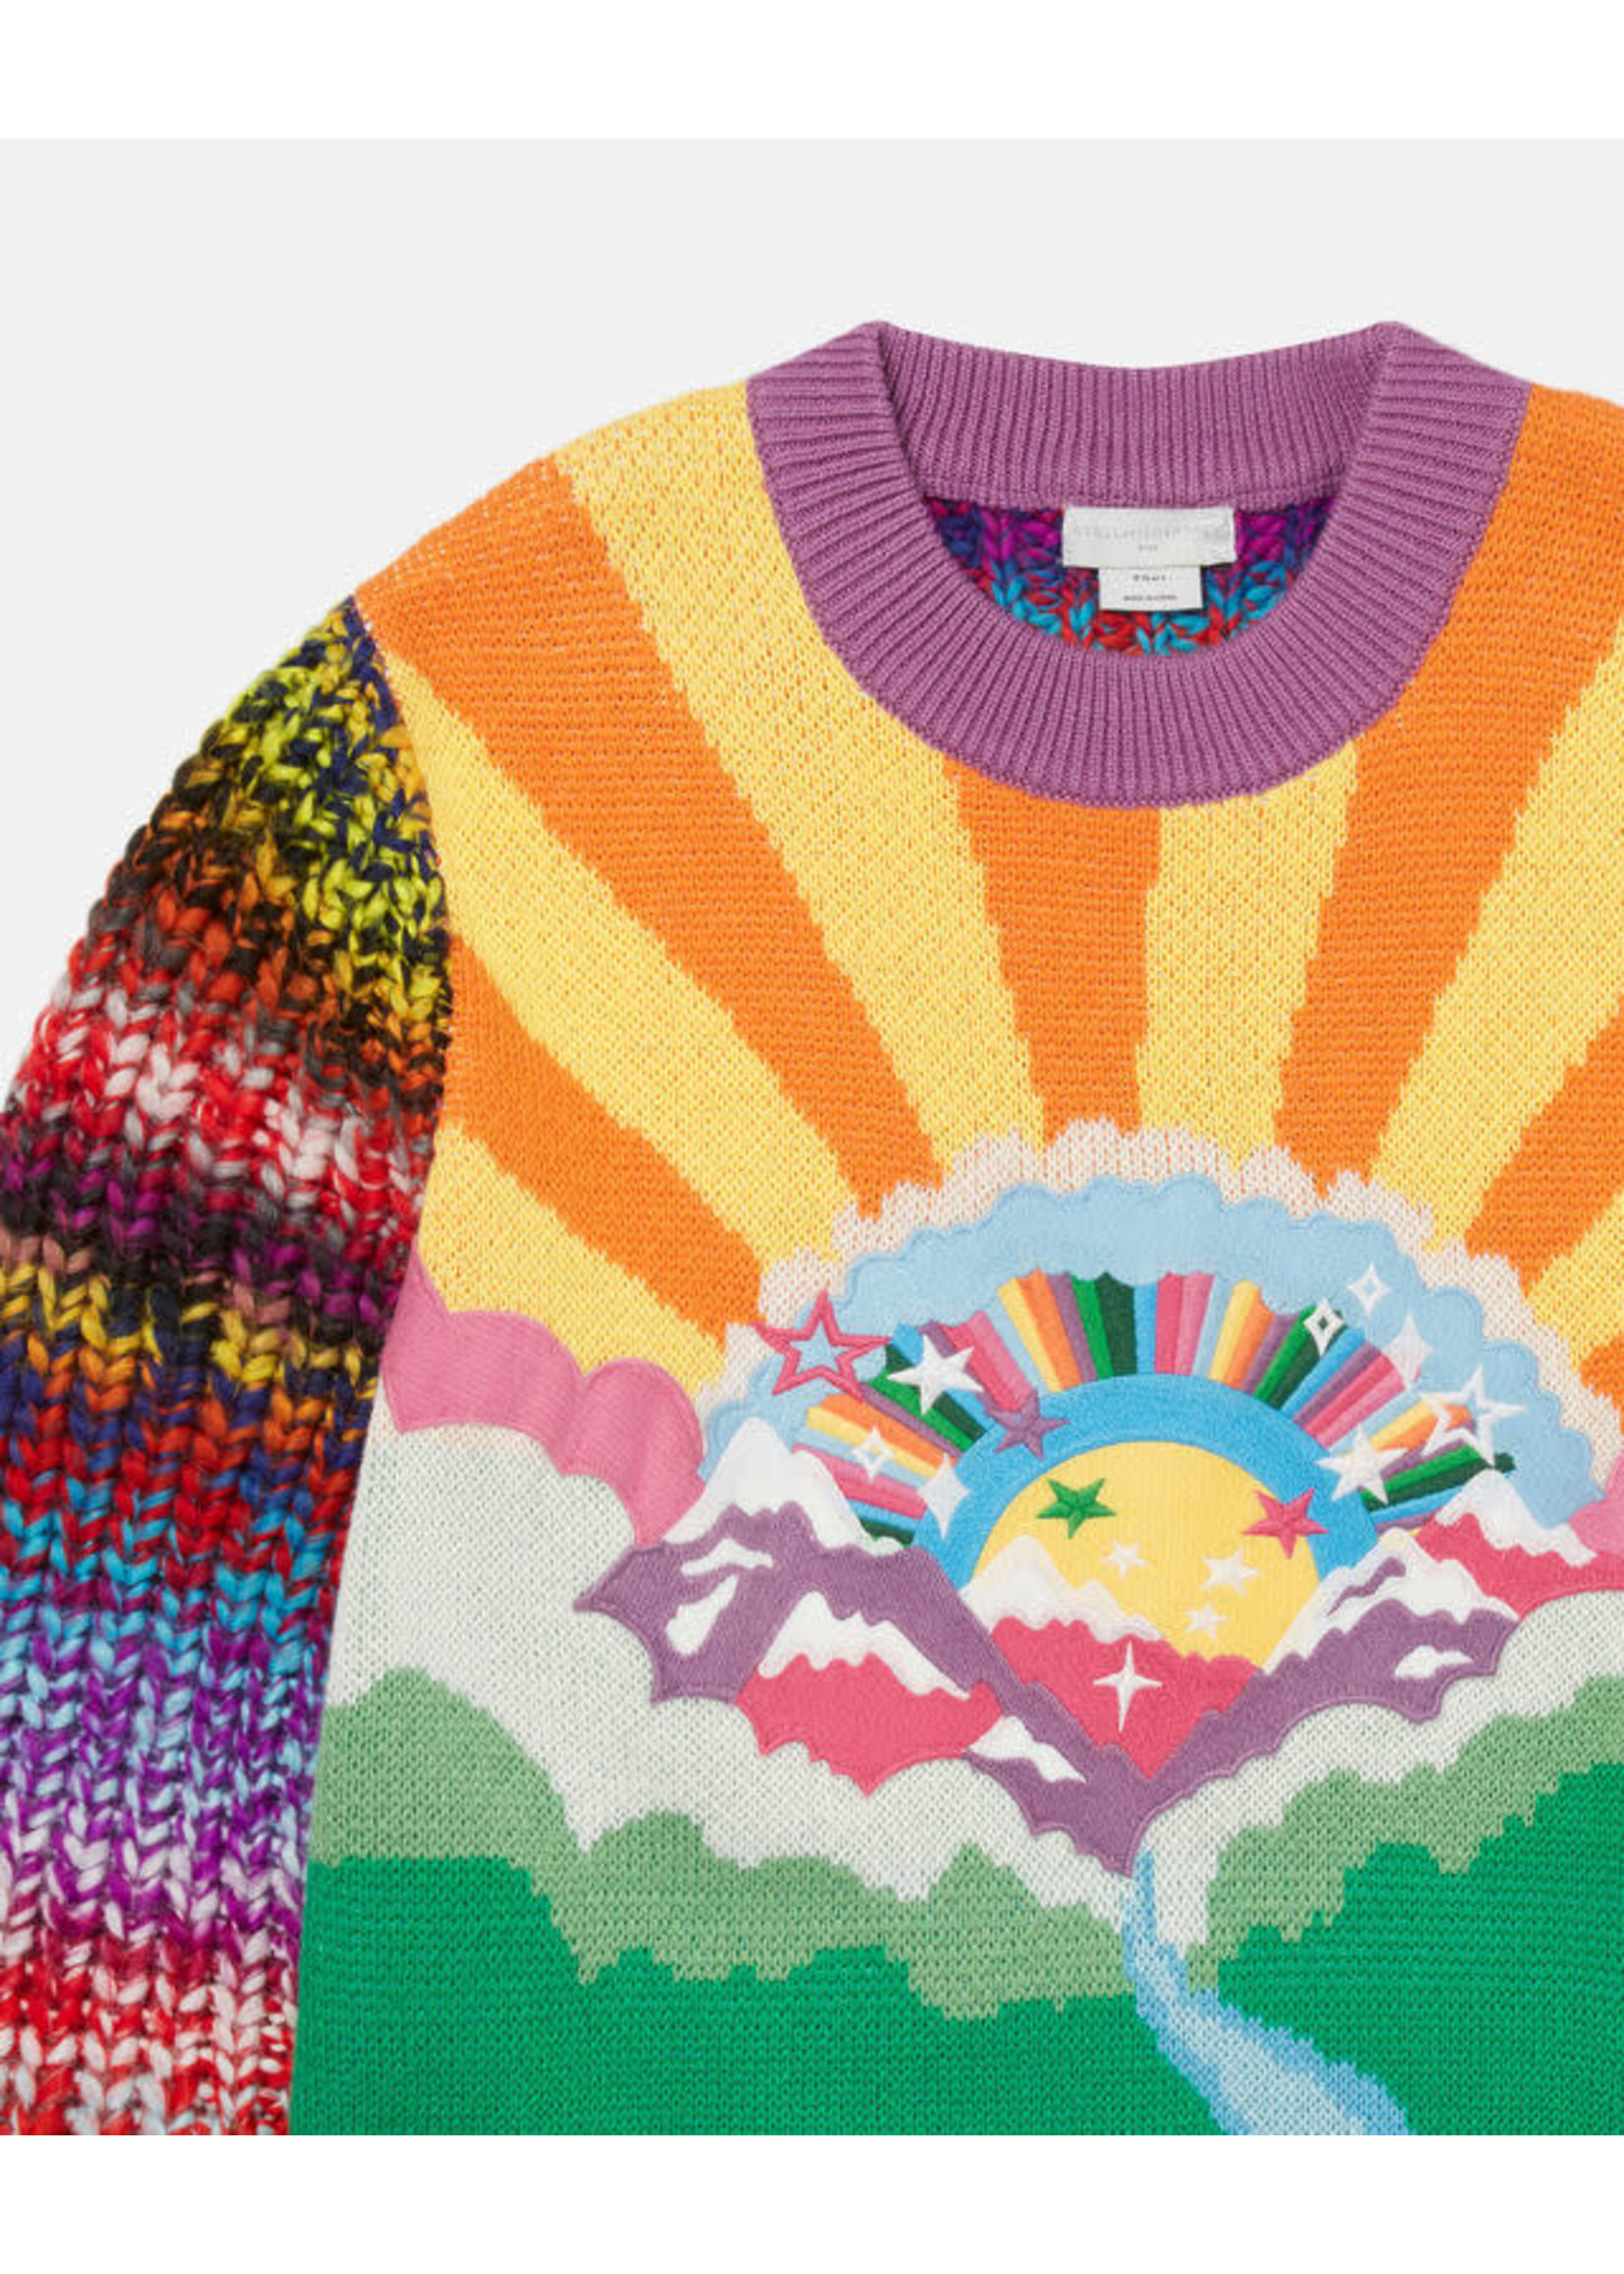 Stella McCartney Stella McCartney Girl knit jumper multicolors - 8R9A60